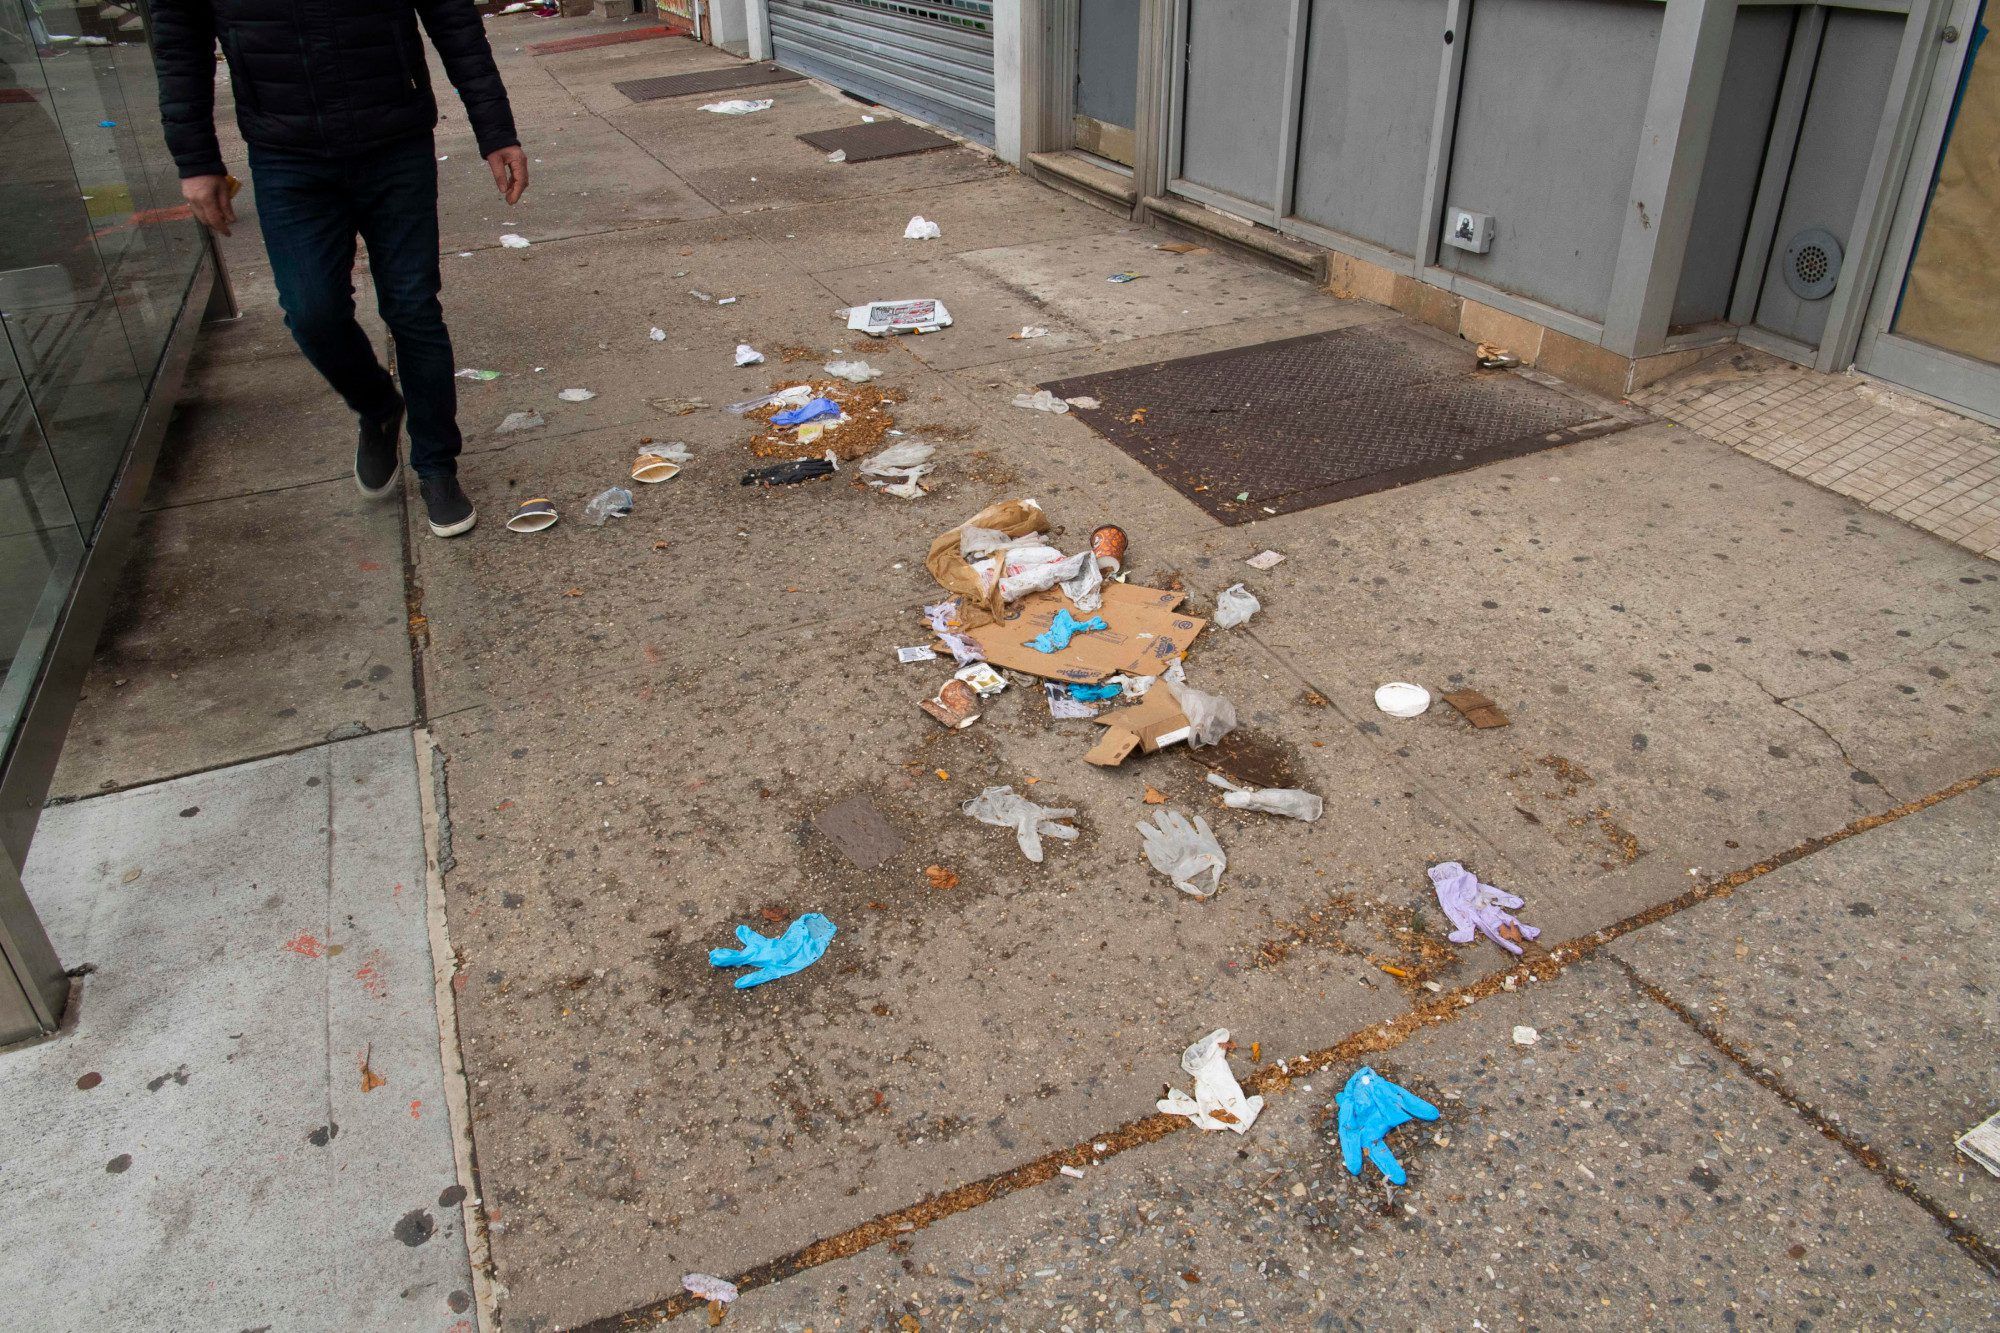 Sidewalk littered with trash